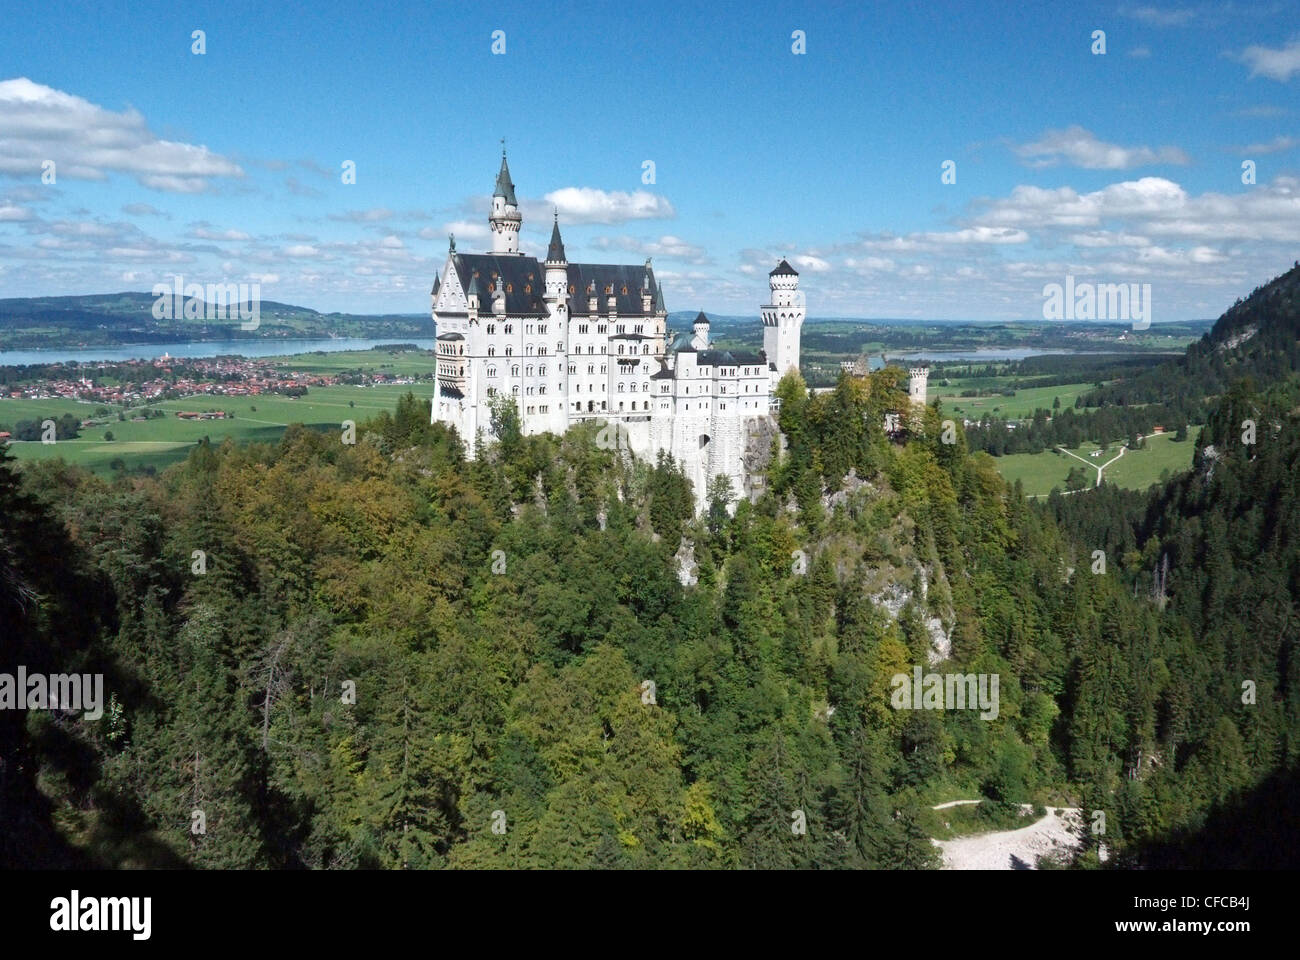 Germany, Ludwig II, Bavaria, Neuschwanstein, castle, Ostallgäu, Allgäu, Romanesque, Revival palace, Schwangau, Bavaria Stock Photo